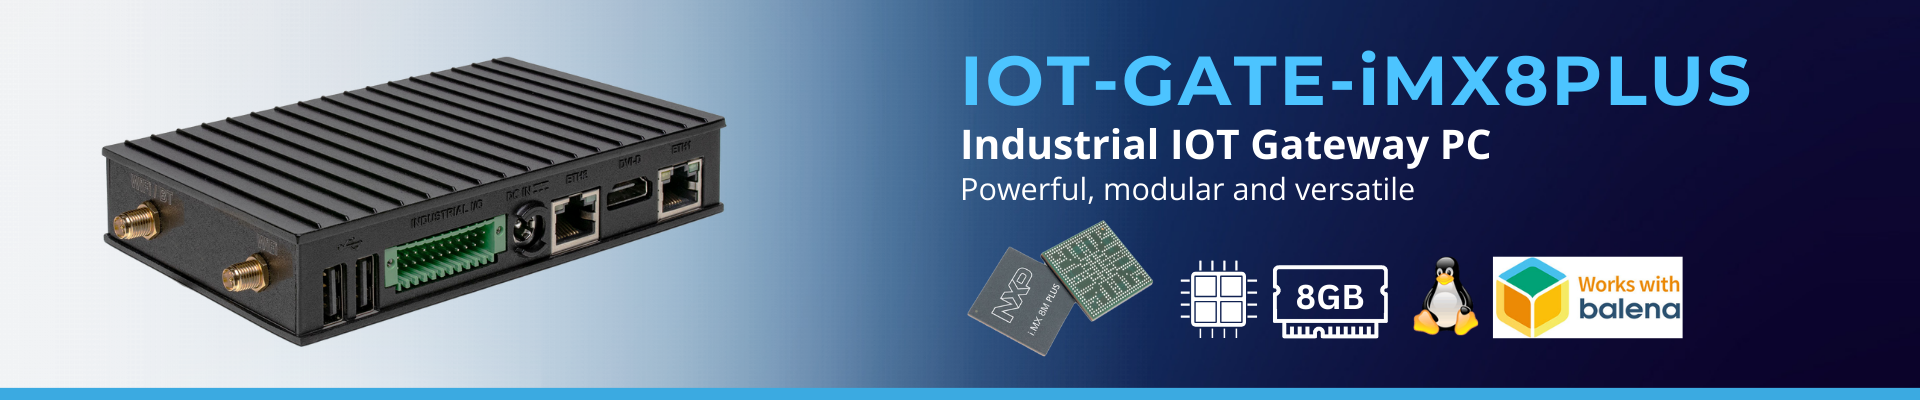 IOT-GATE-iMX8PLUS: Industrial IoT Gateway